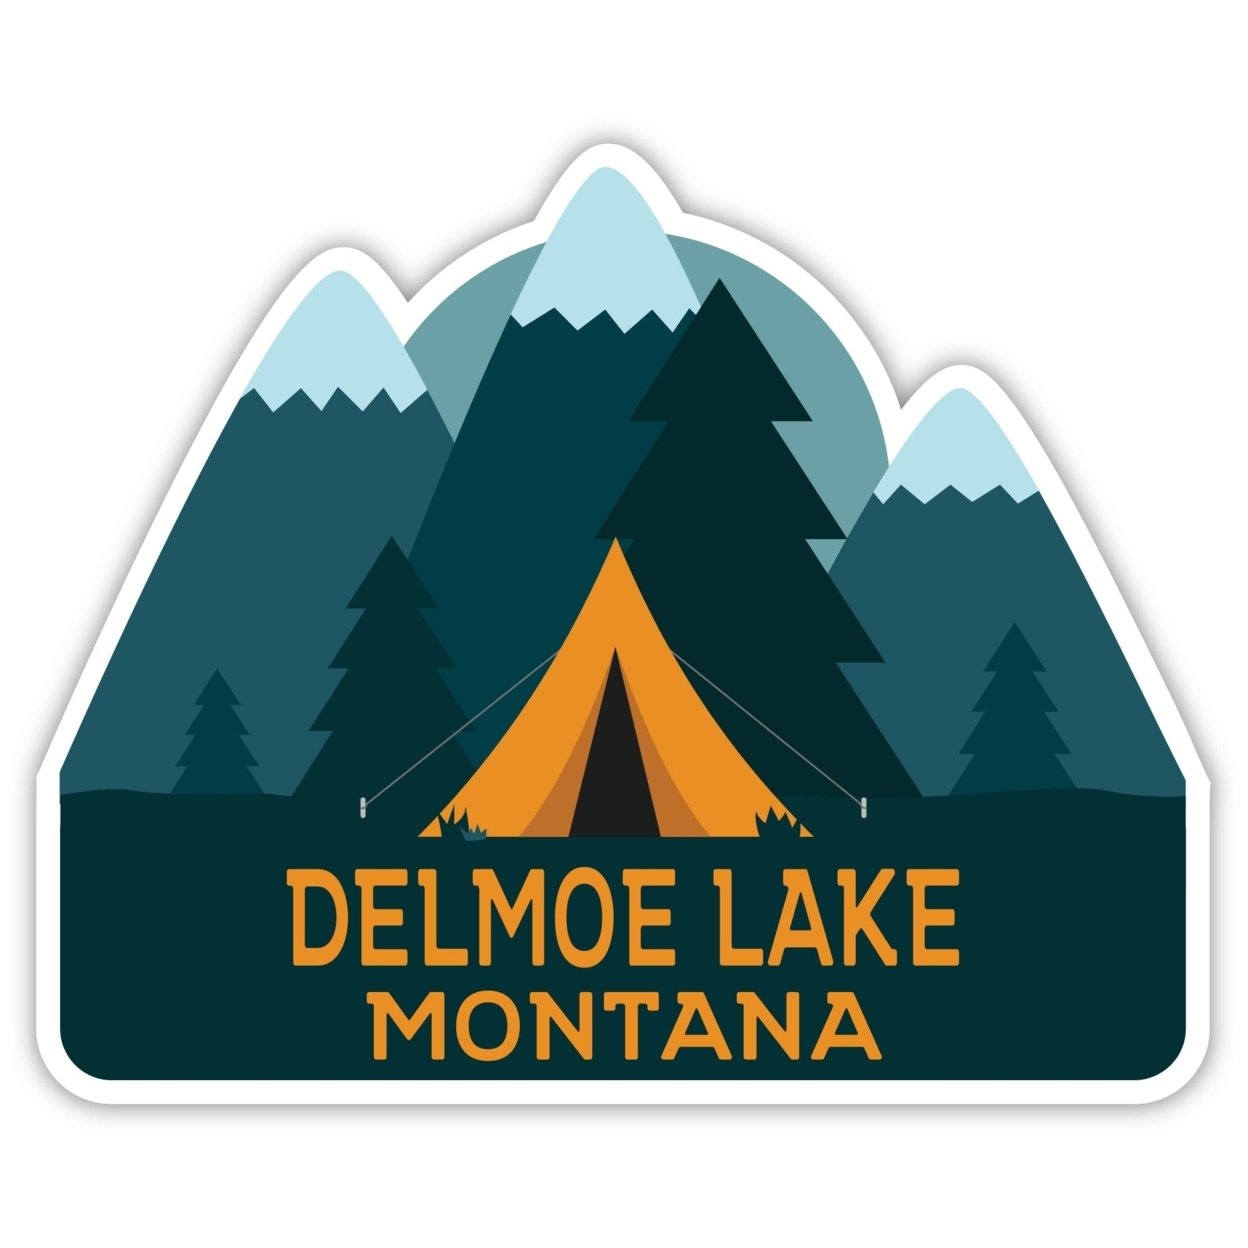 Delmoe Lake Montana Souvenir Decorative Stickers (Choose Theme And Size) - 4-Pack, 2-Inch, Tent